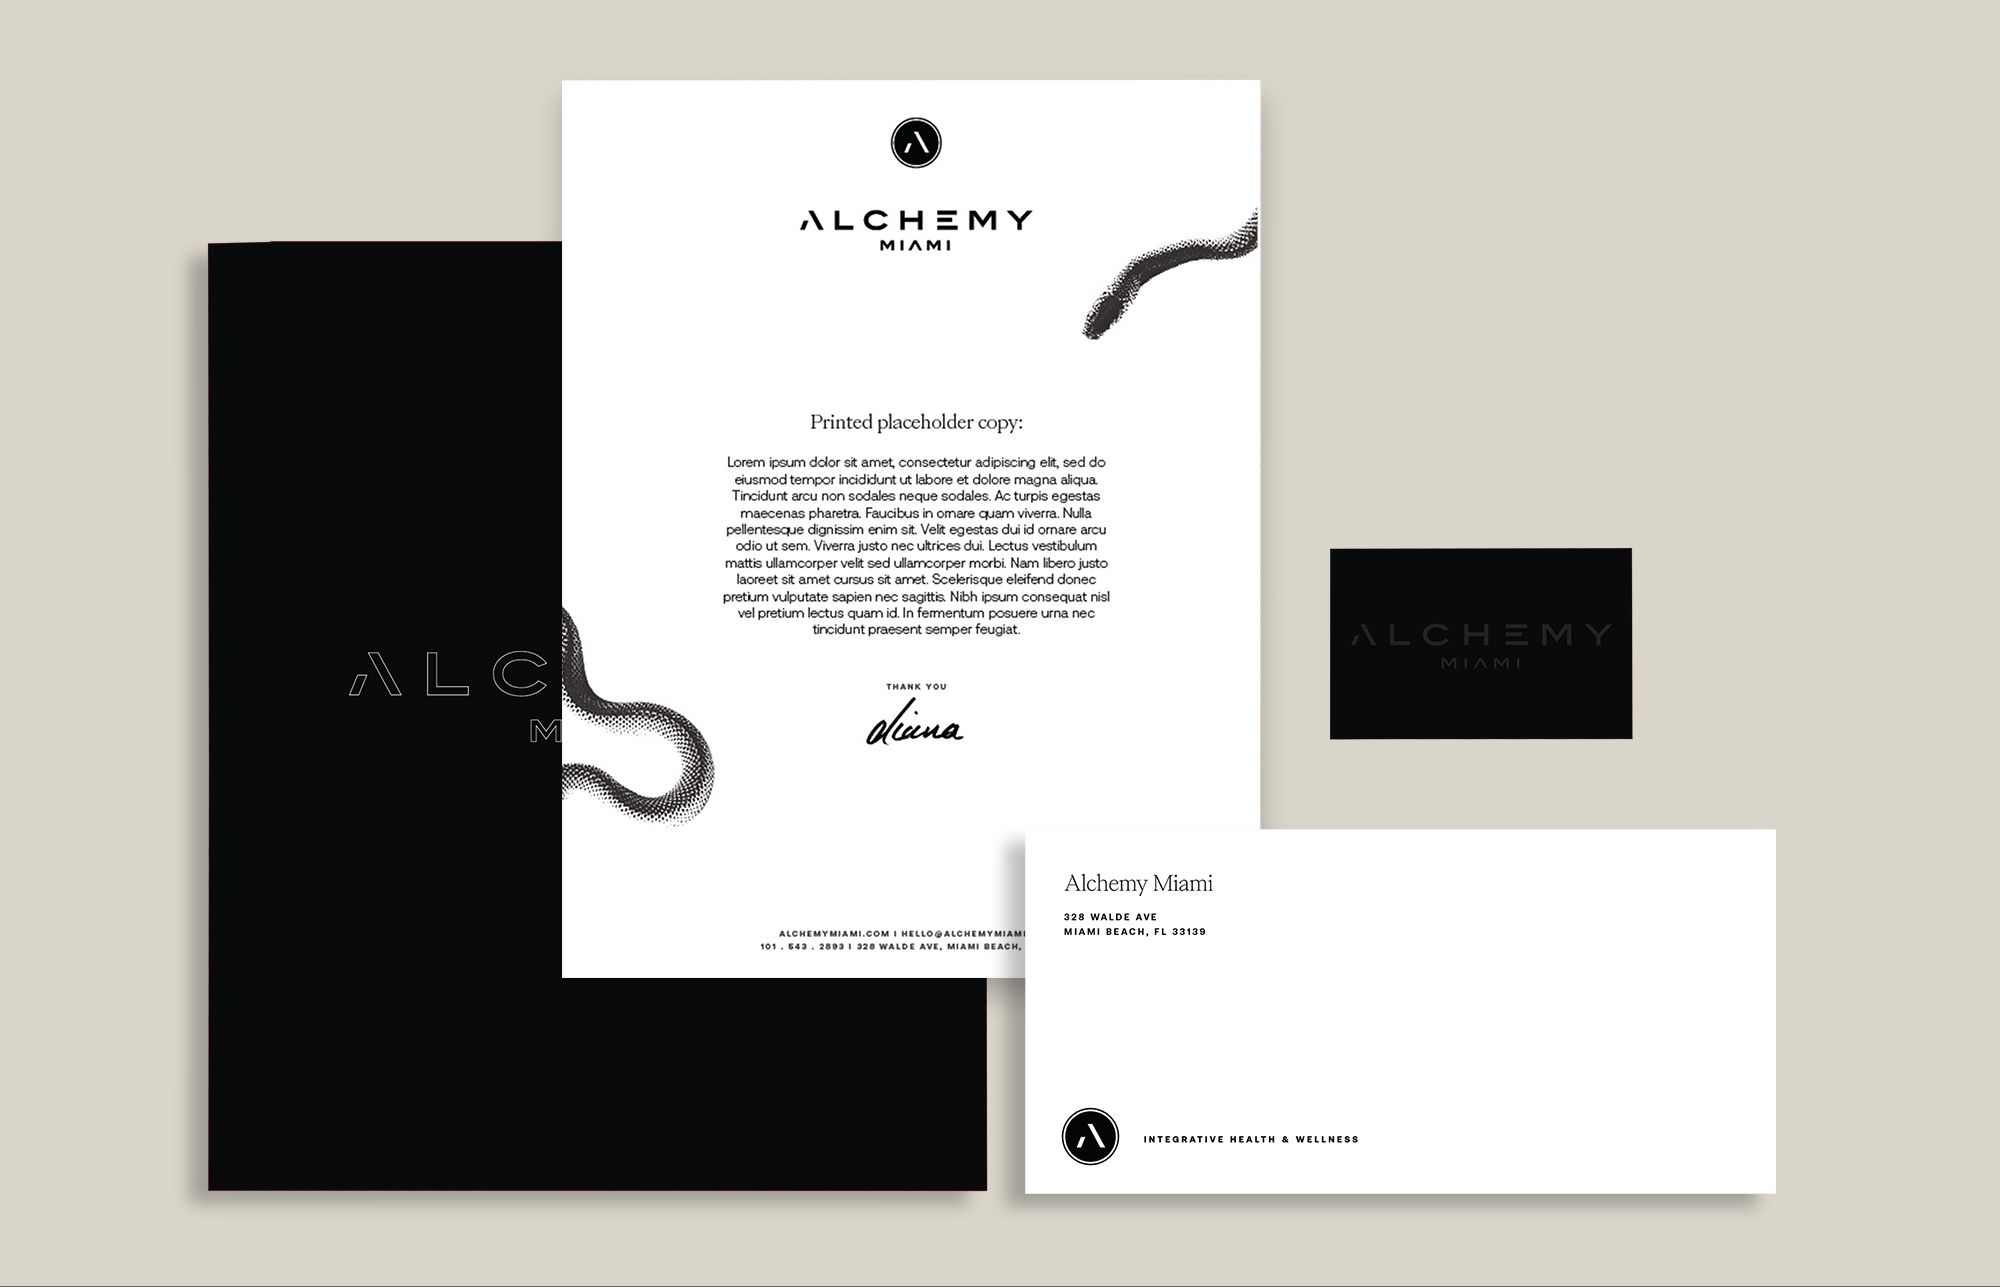 Alchemy Stationary: letterhead, envelope, folder, and business card